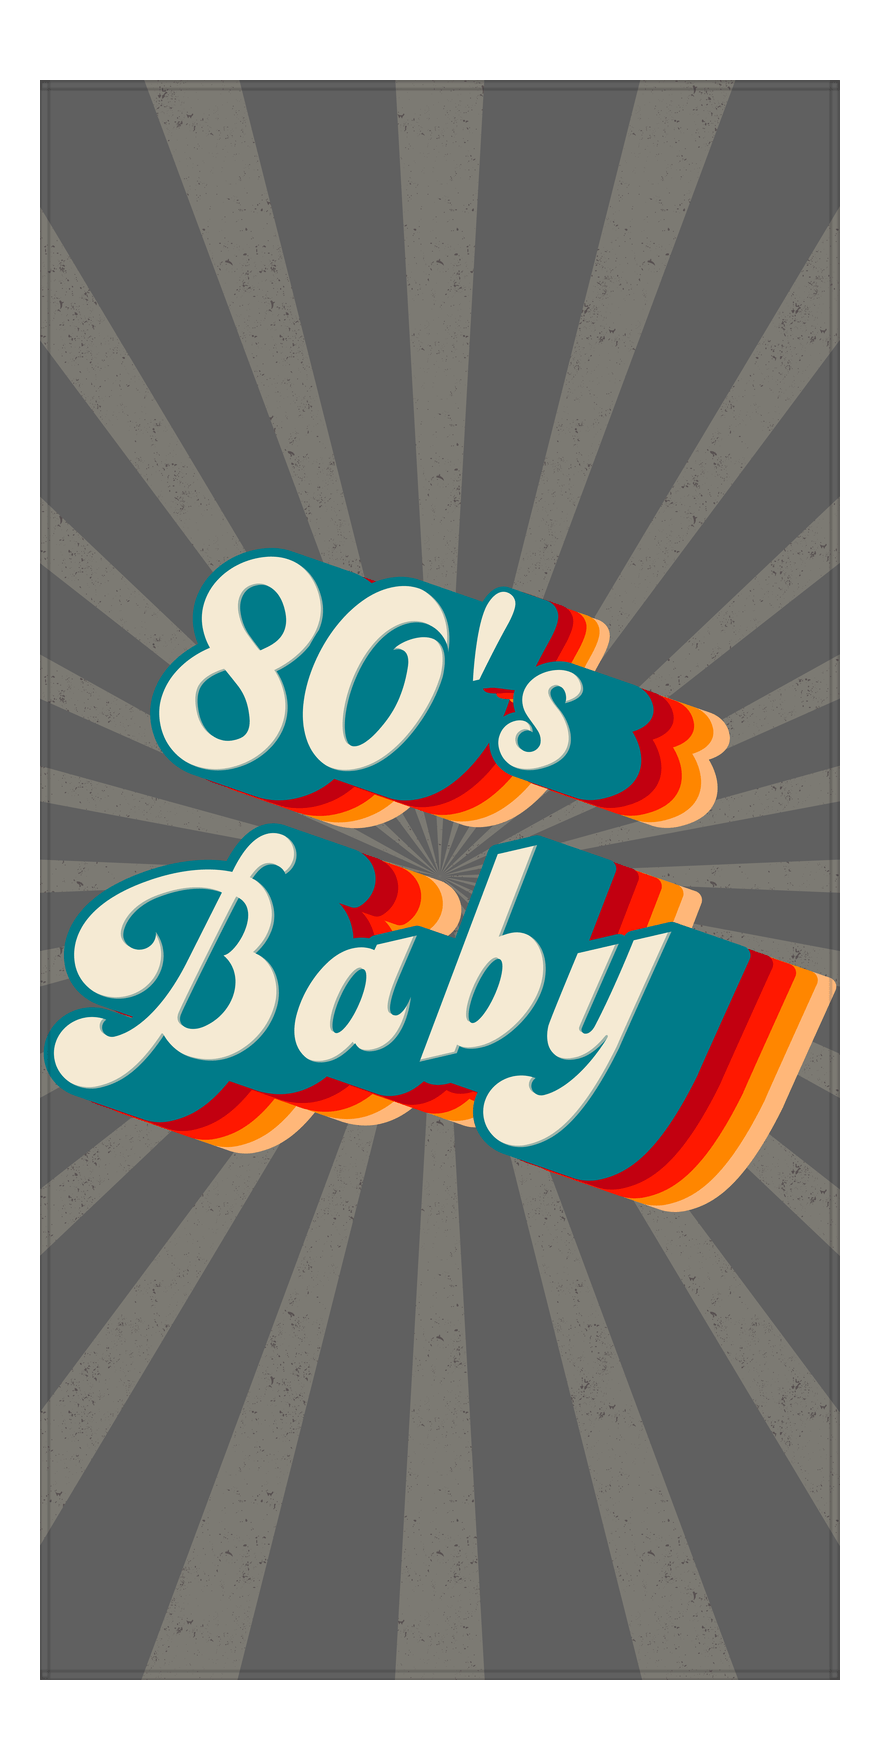 Retro Beach Towel - 80's Baby - Front View